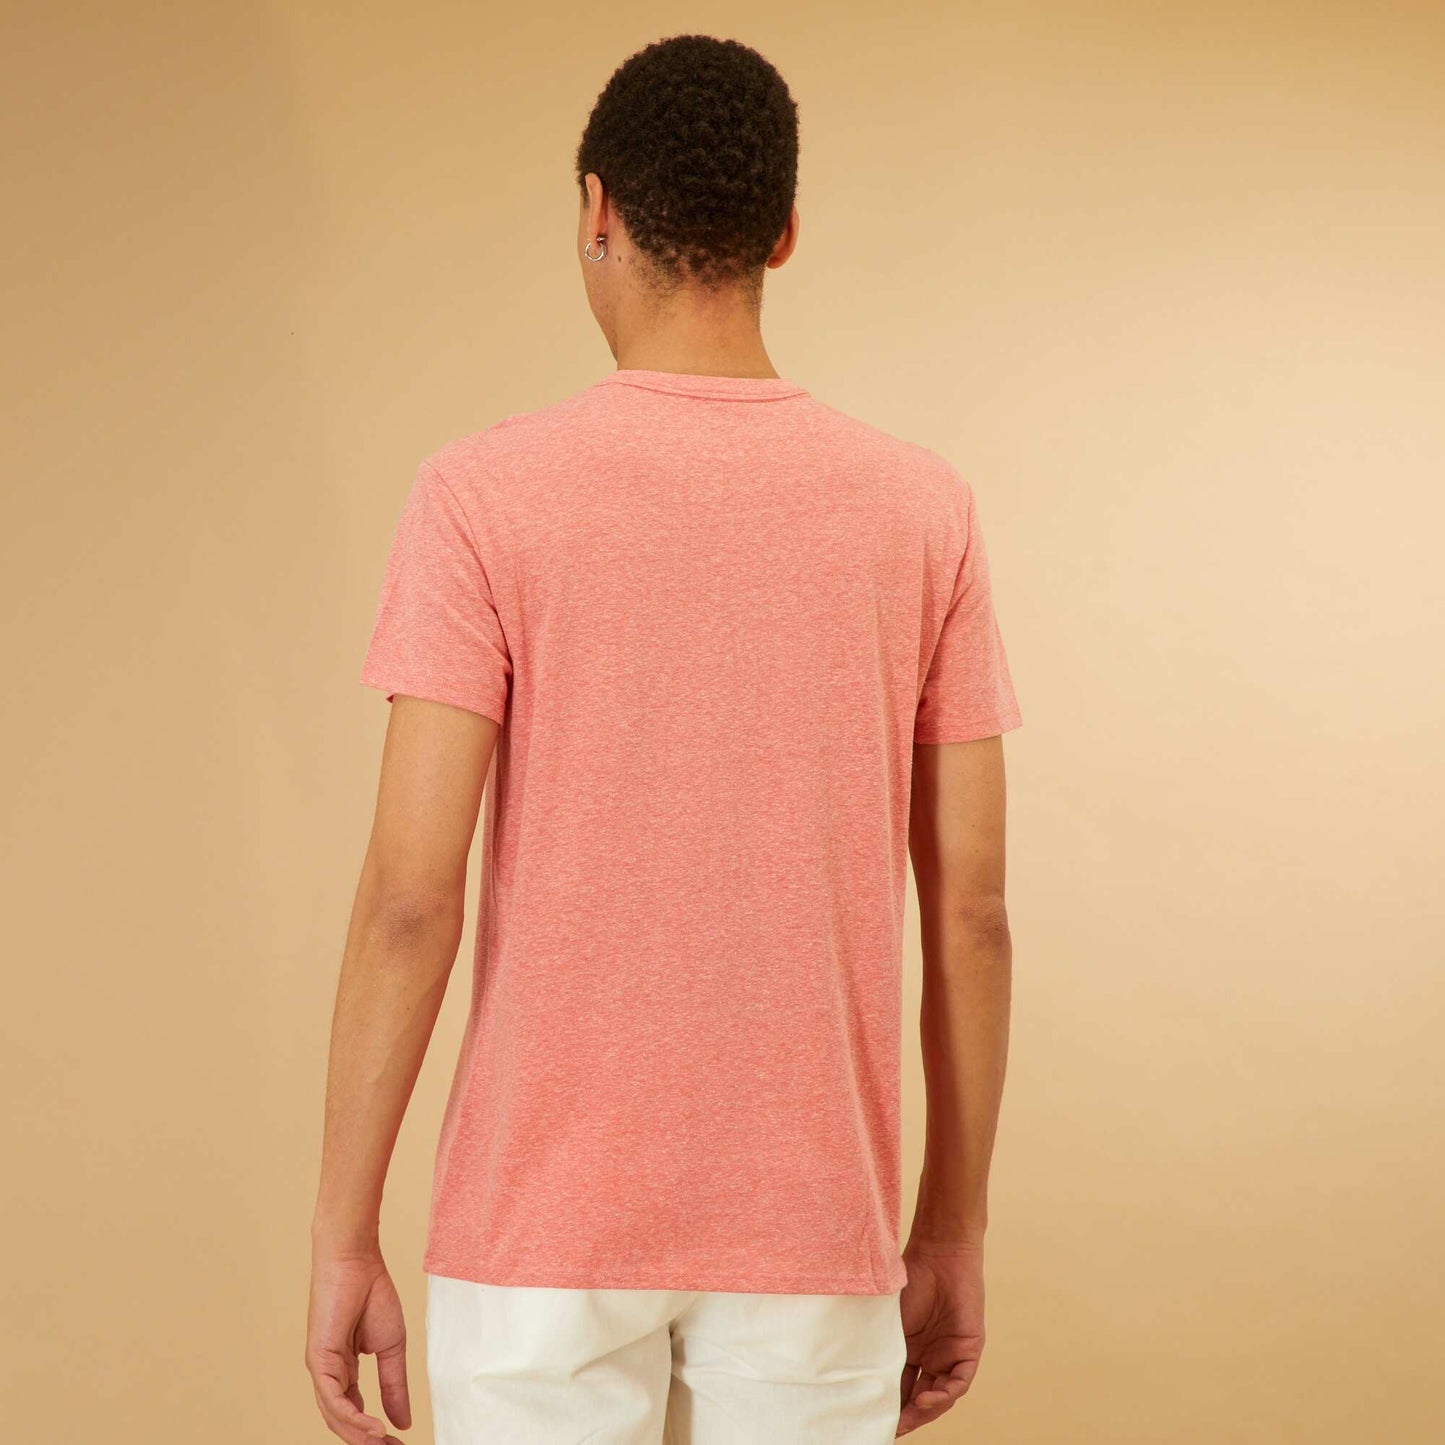 Camiseta con efecto jaspeado rosa